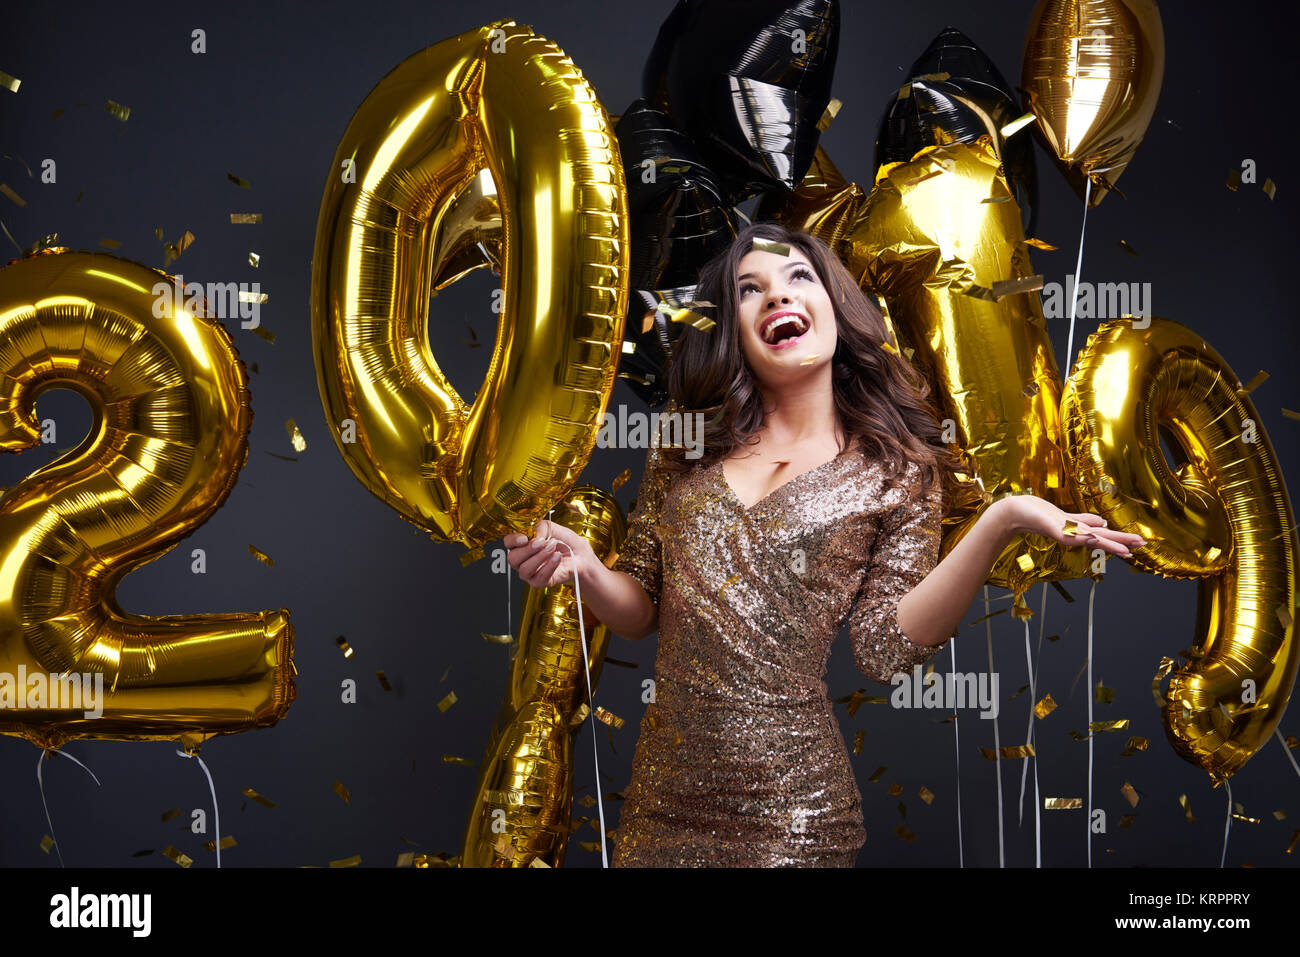 Cheerful woman enjoying at new year's party Stock Photo